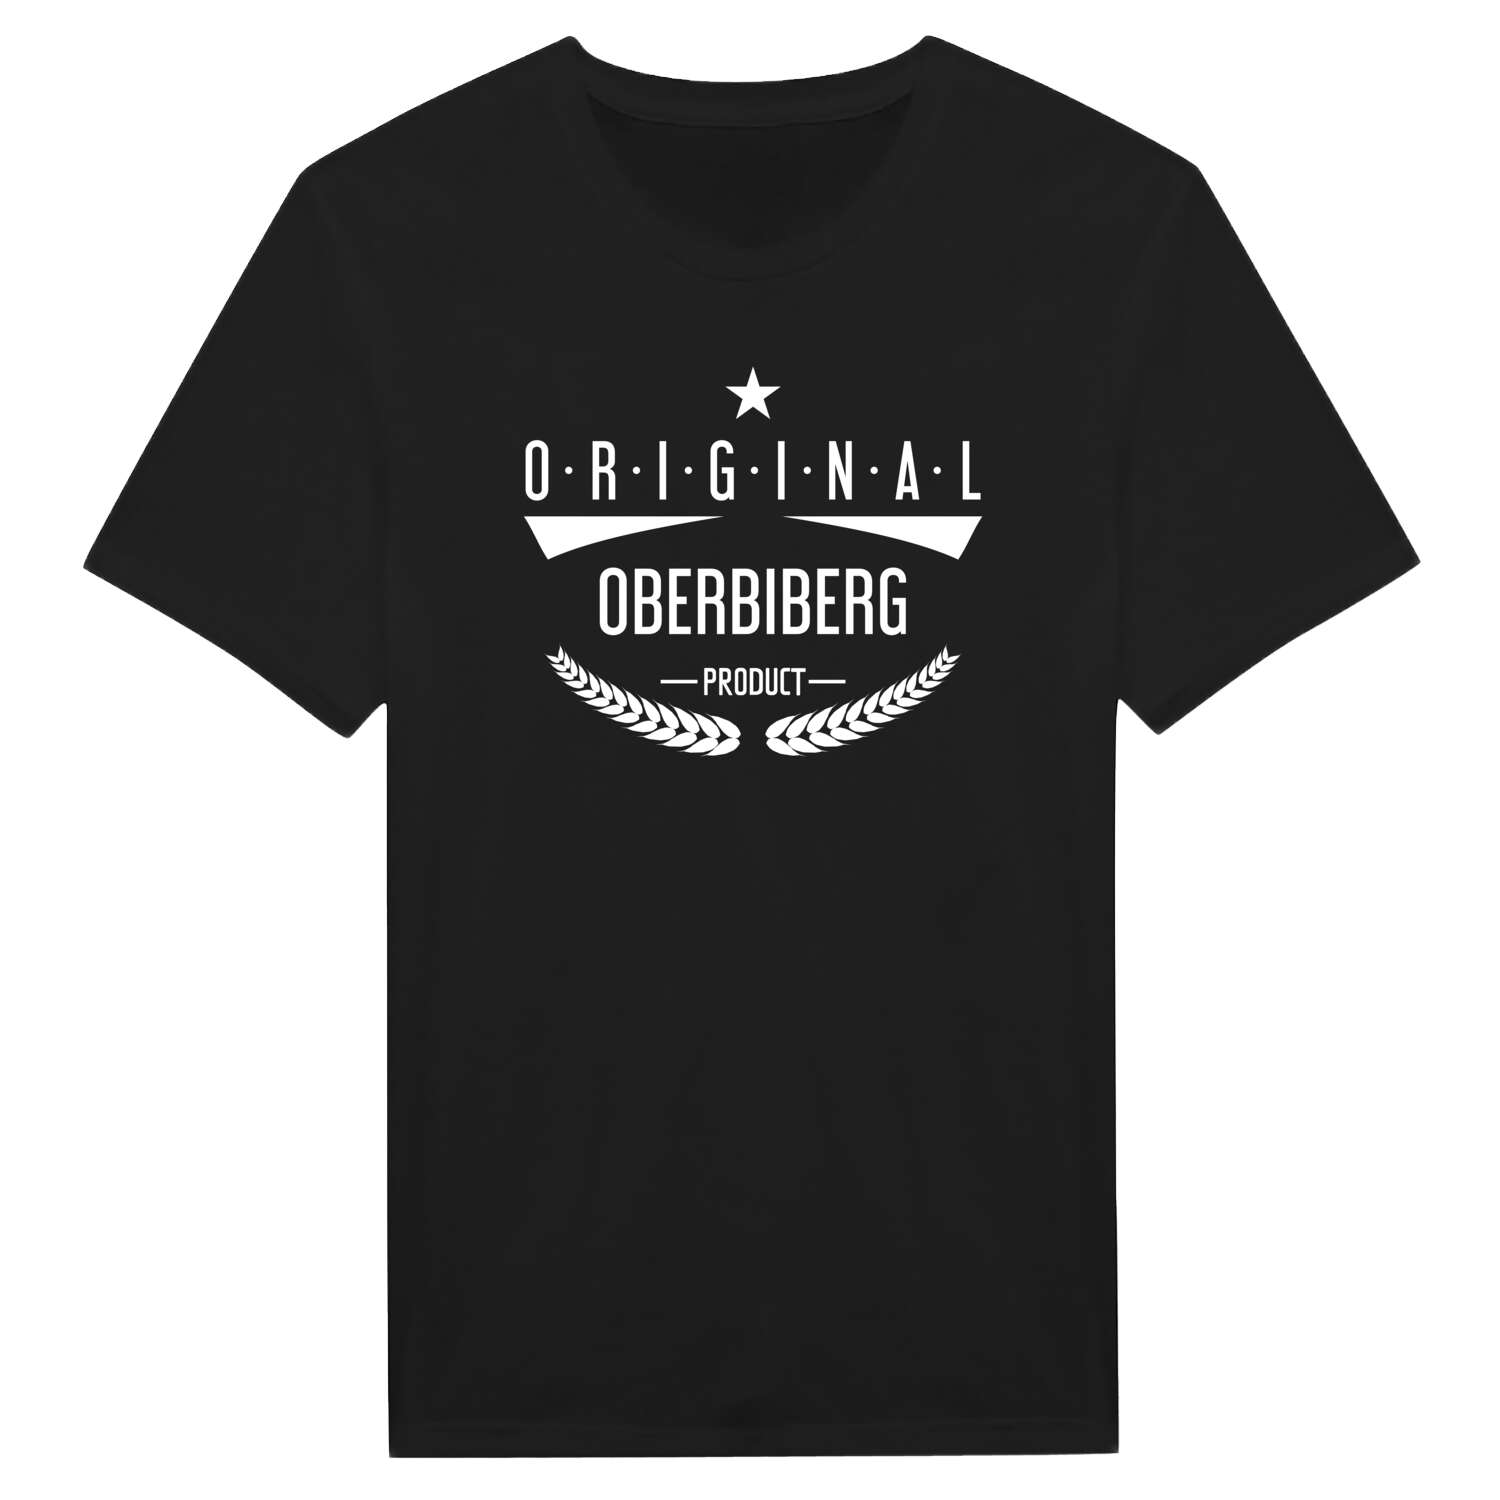 Oberbiberg T-Shirt »Original Product«